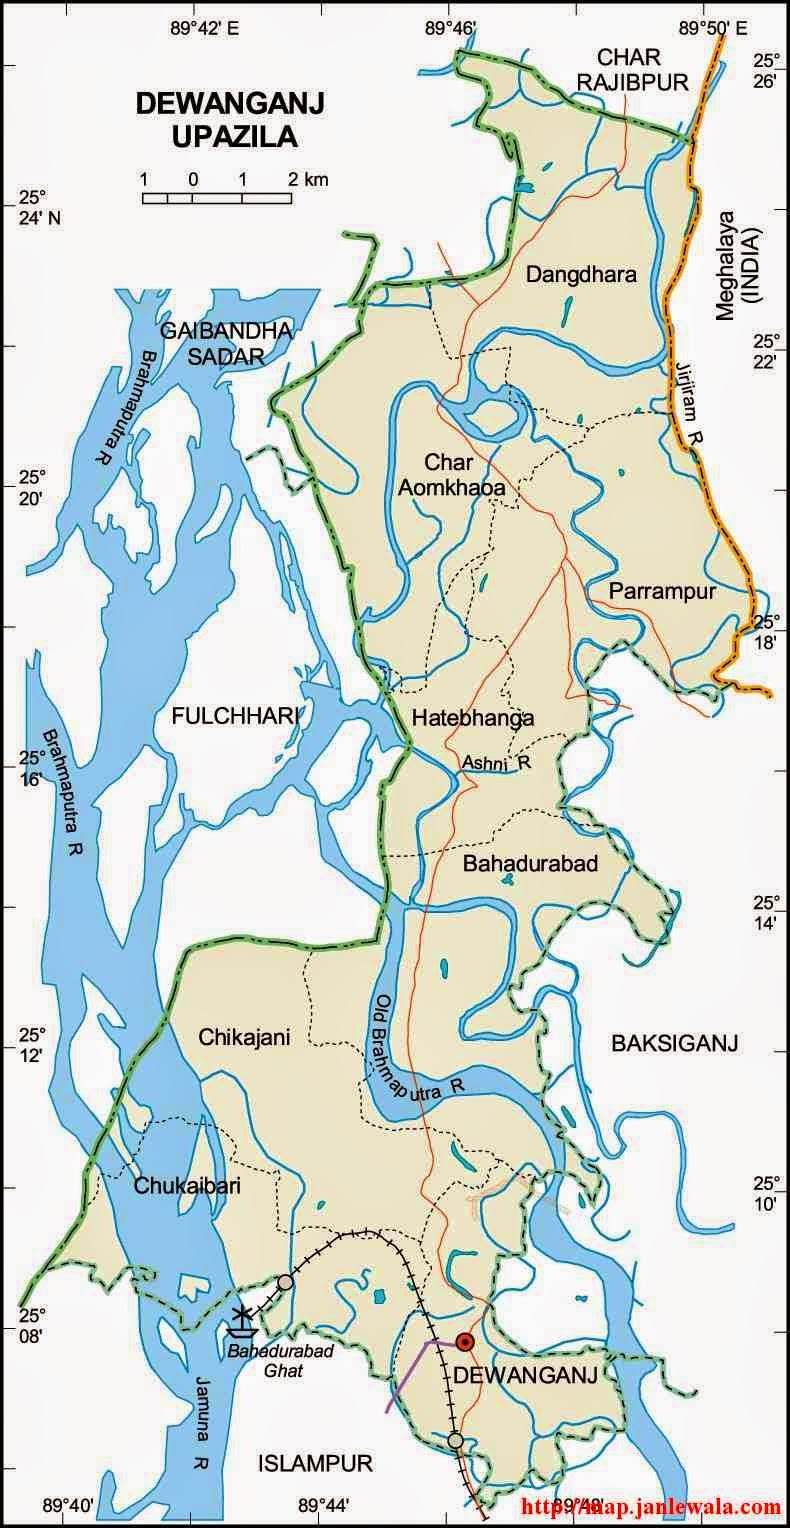 dewanganj upazila map of bangladesh